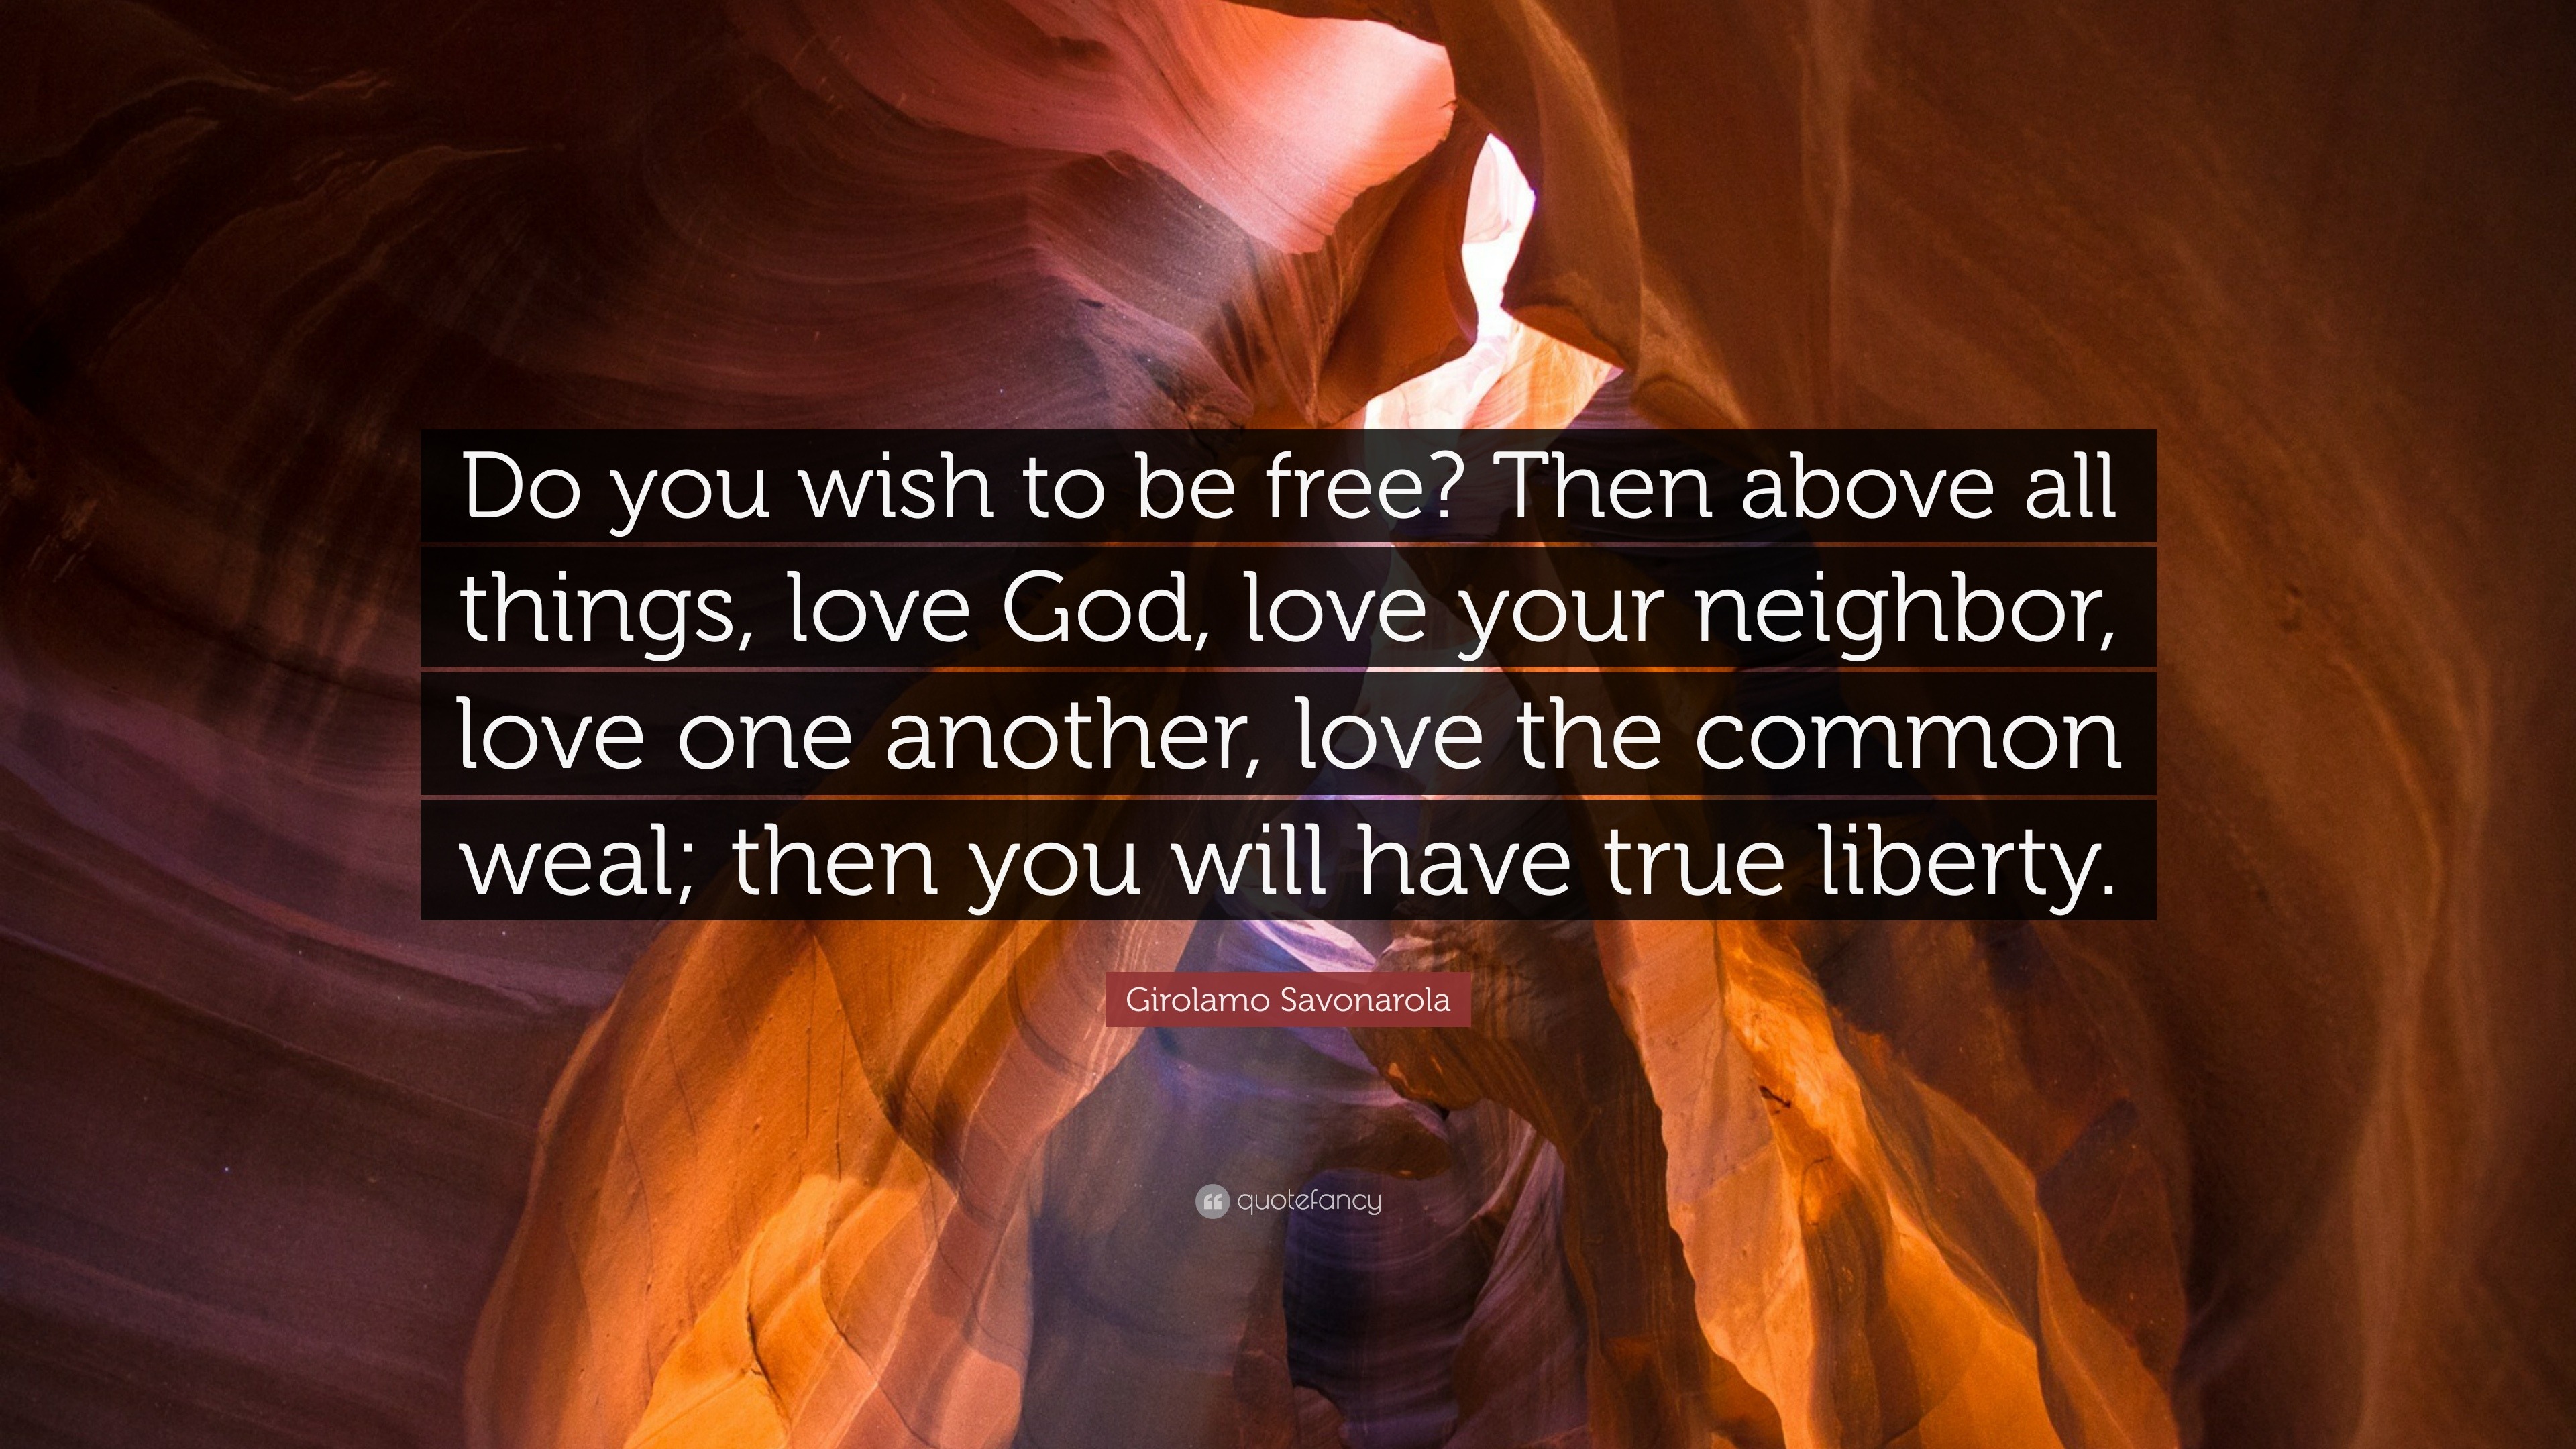 Girolamo Savonarola Quote “Do you wish to be free Then above all things